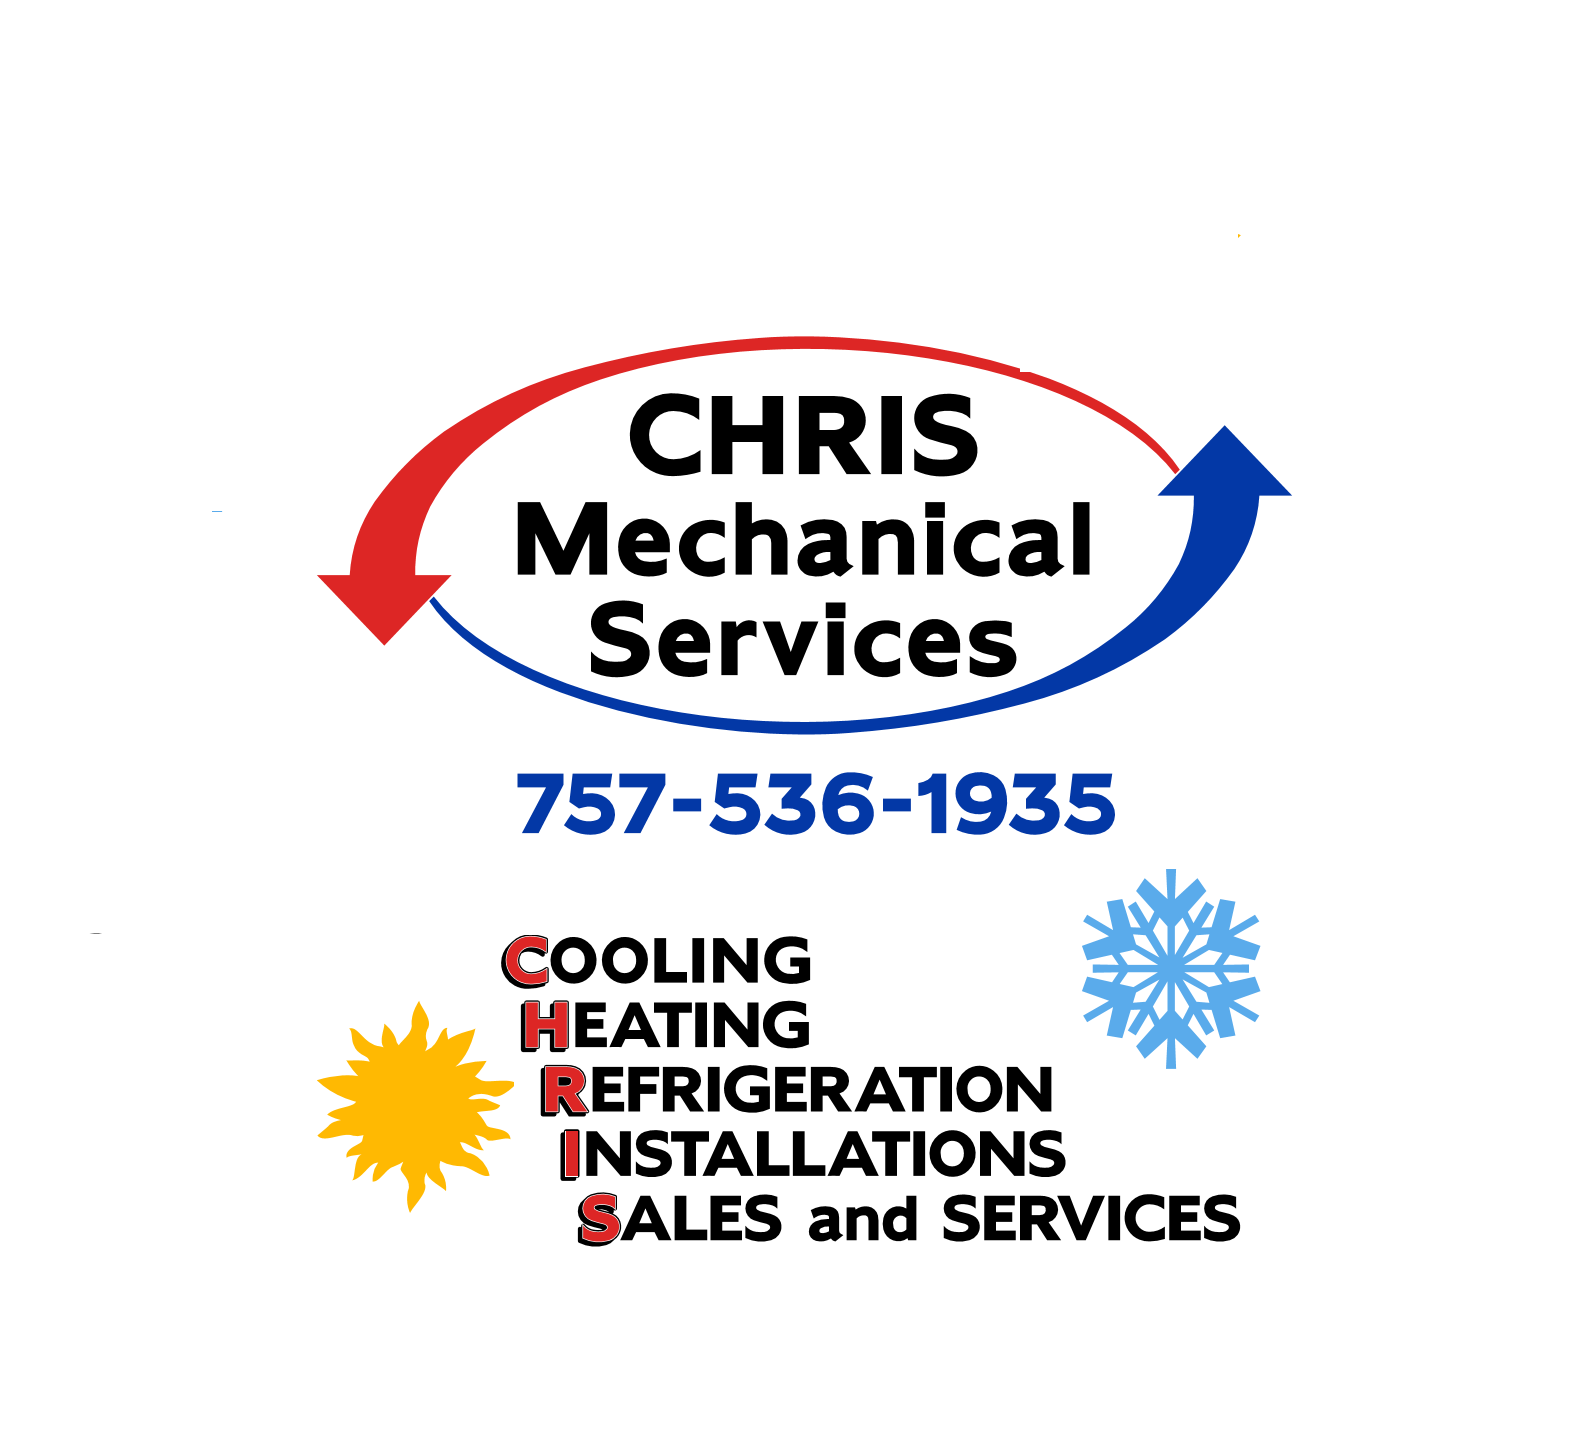 Chris Mechanical Services